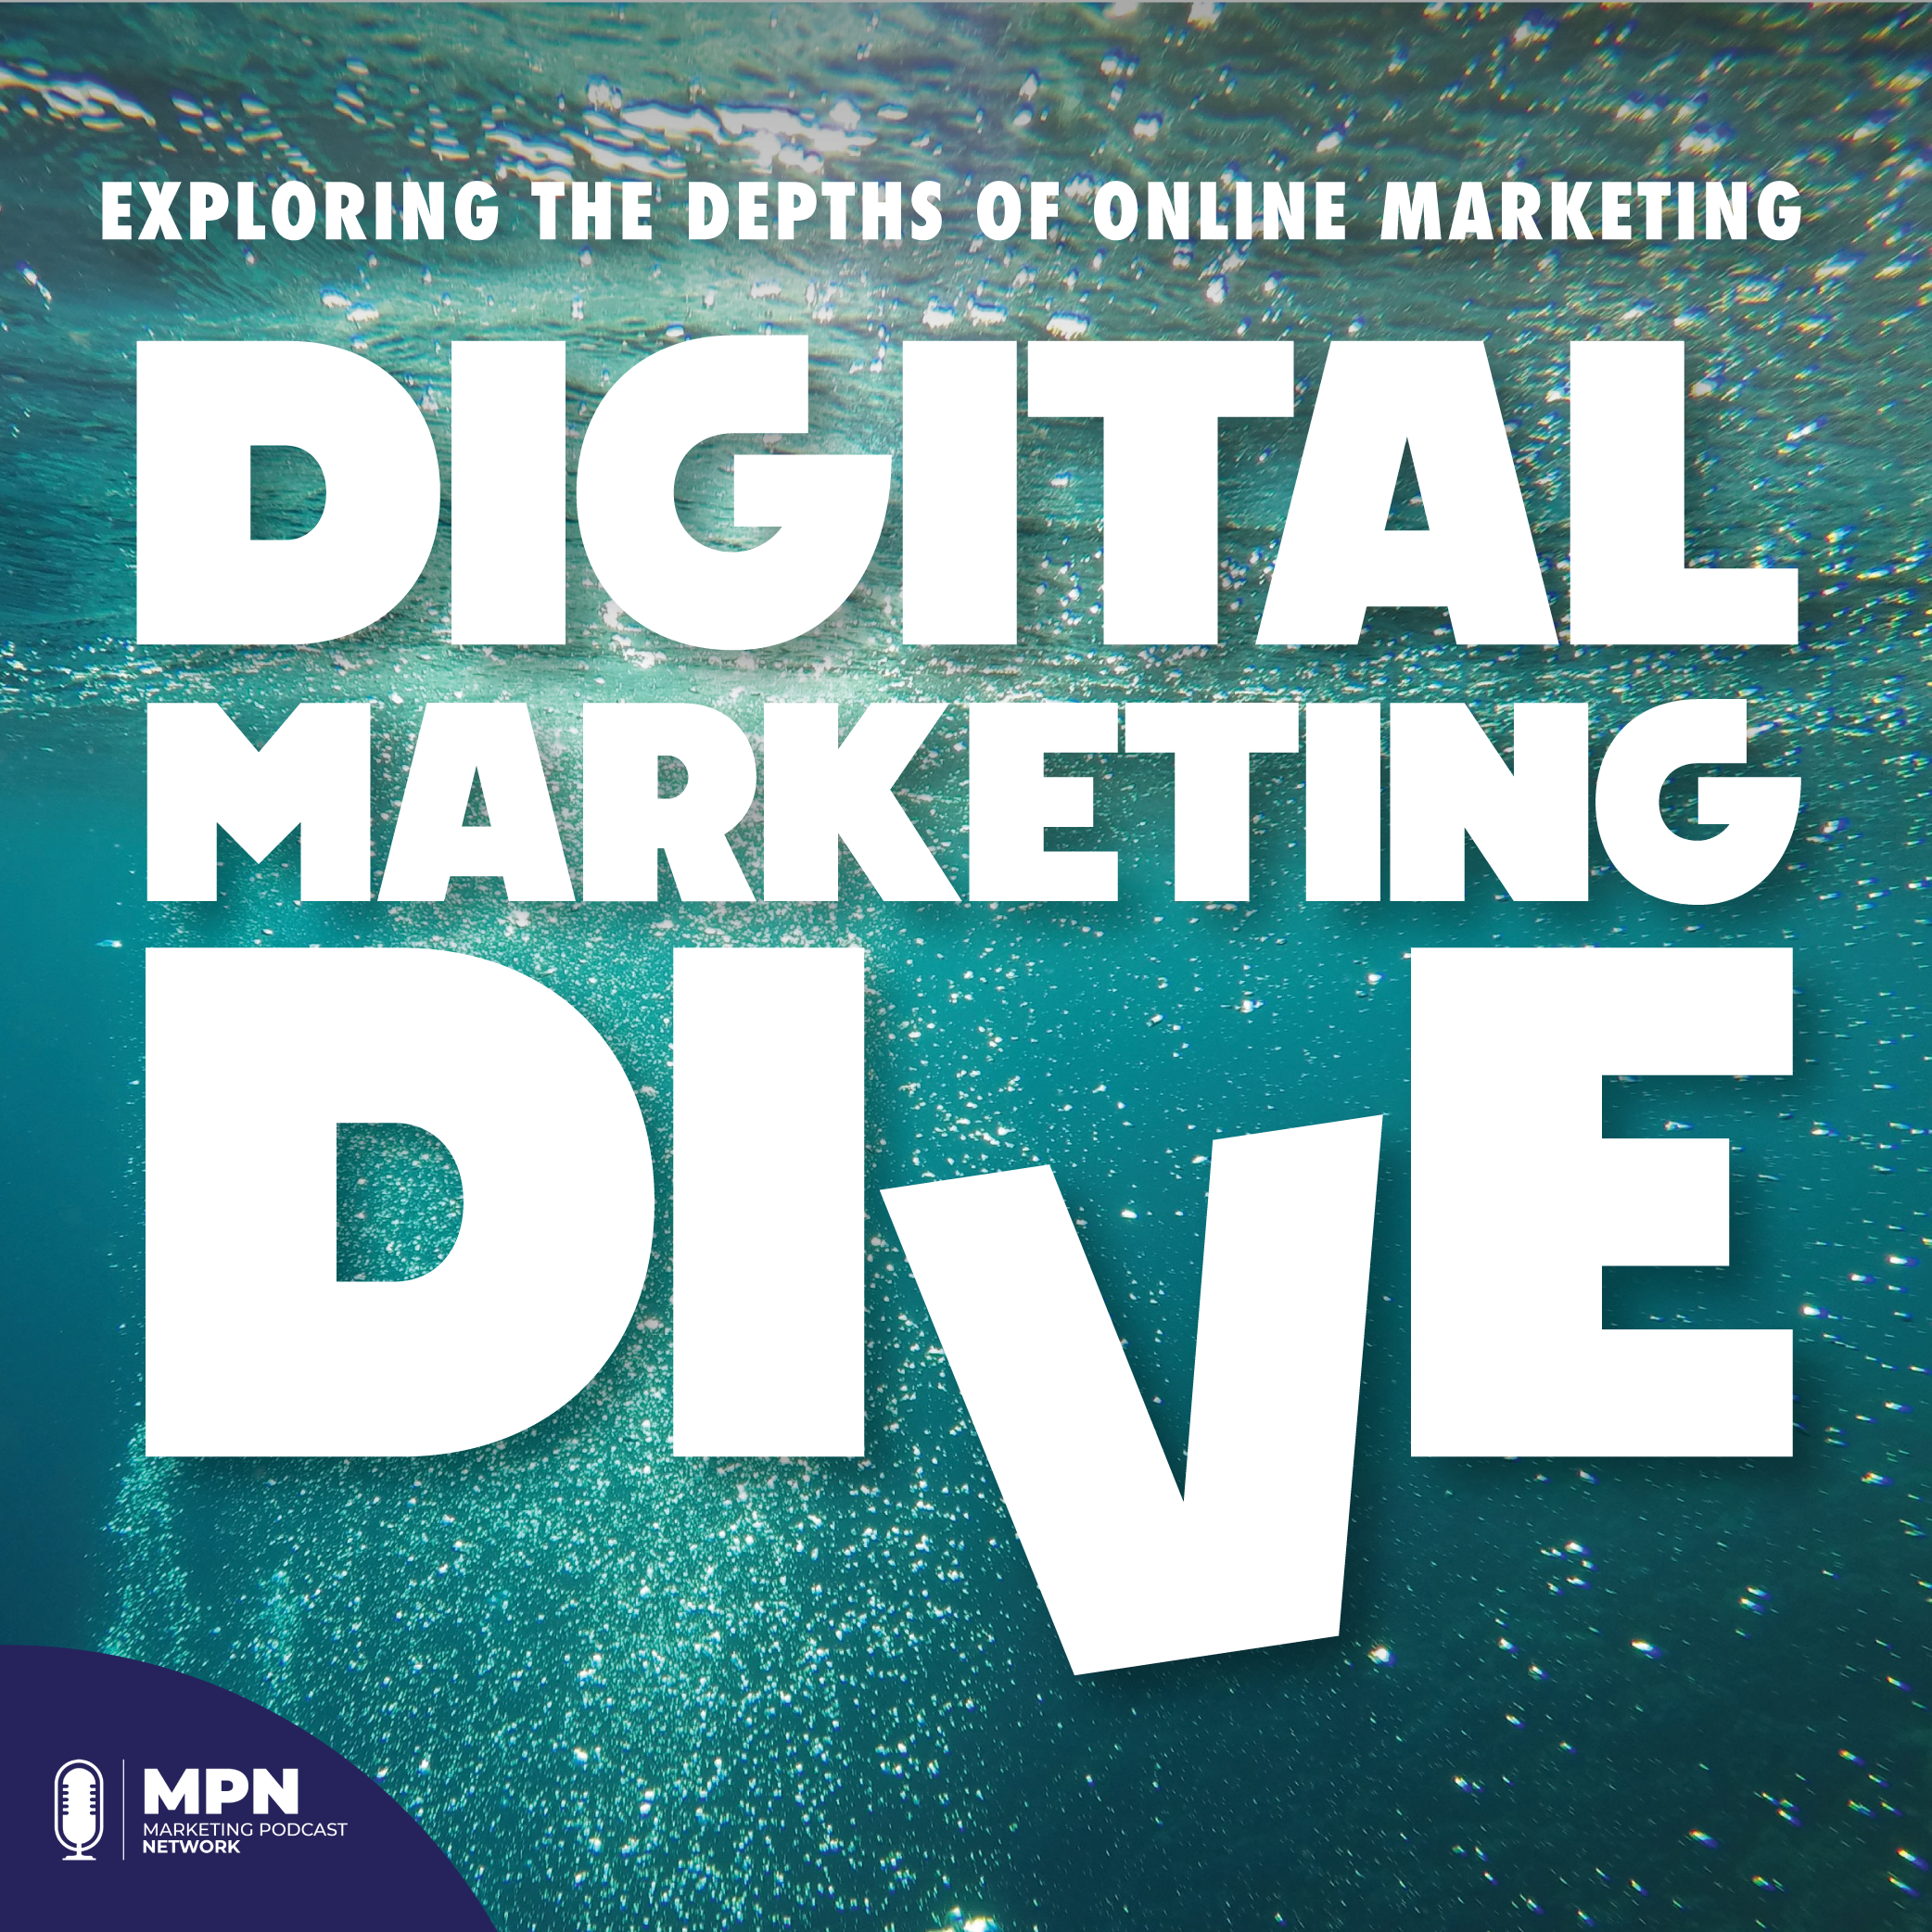 Digital Marketing Dive